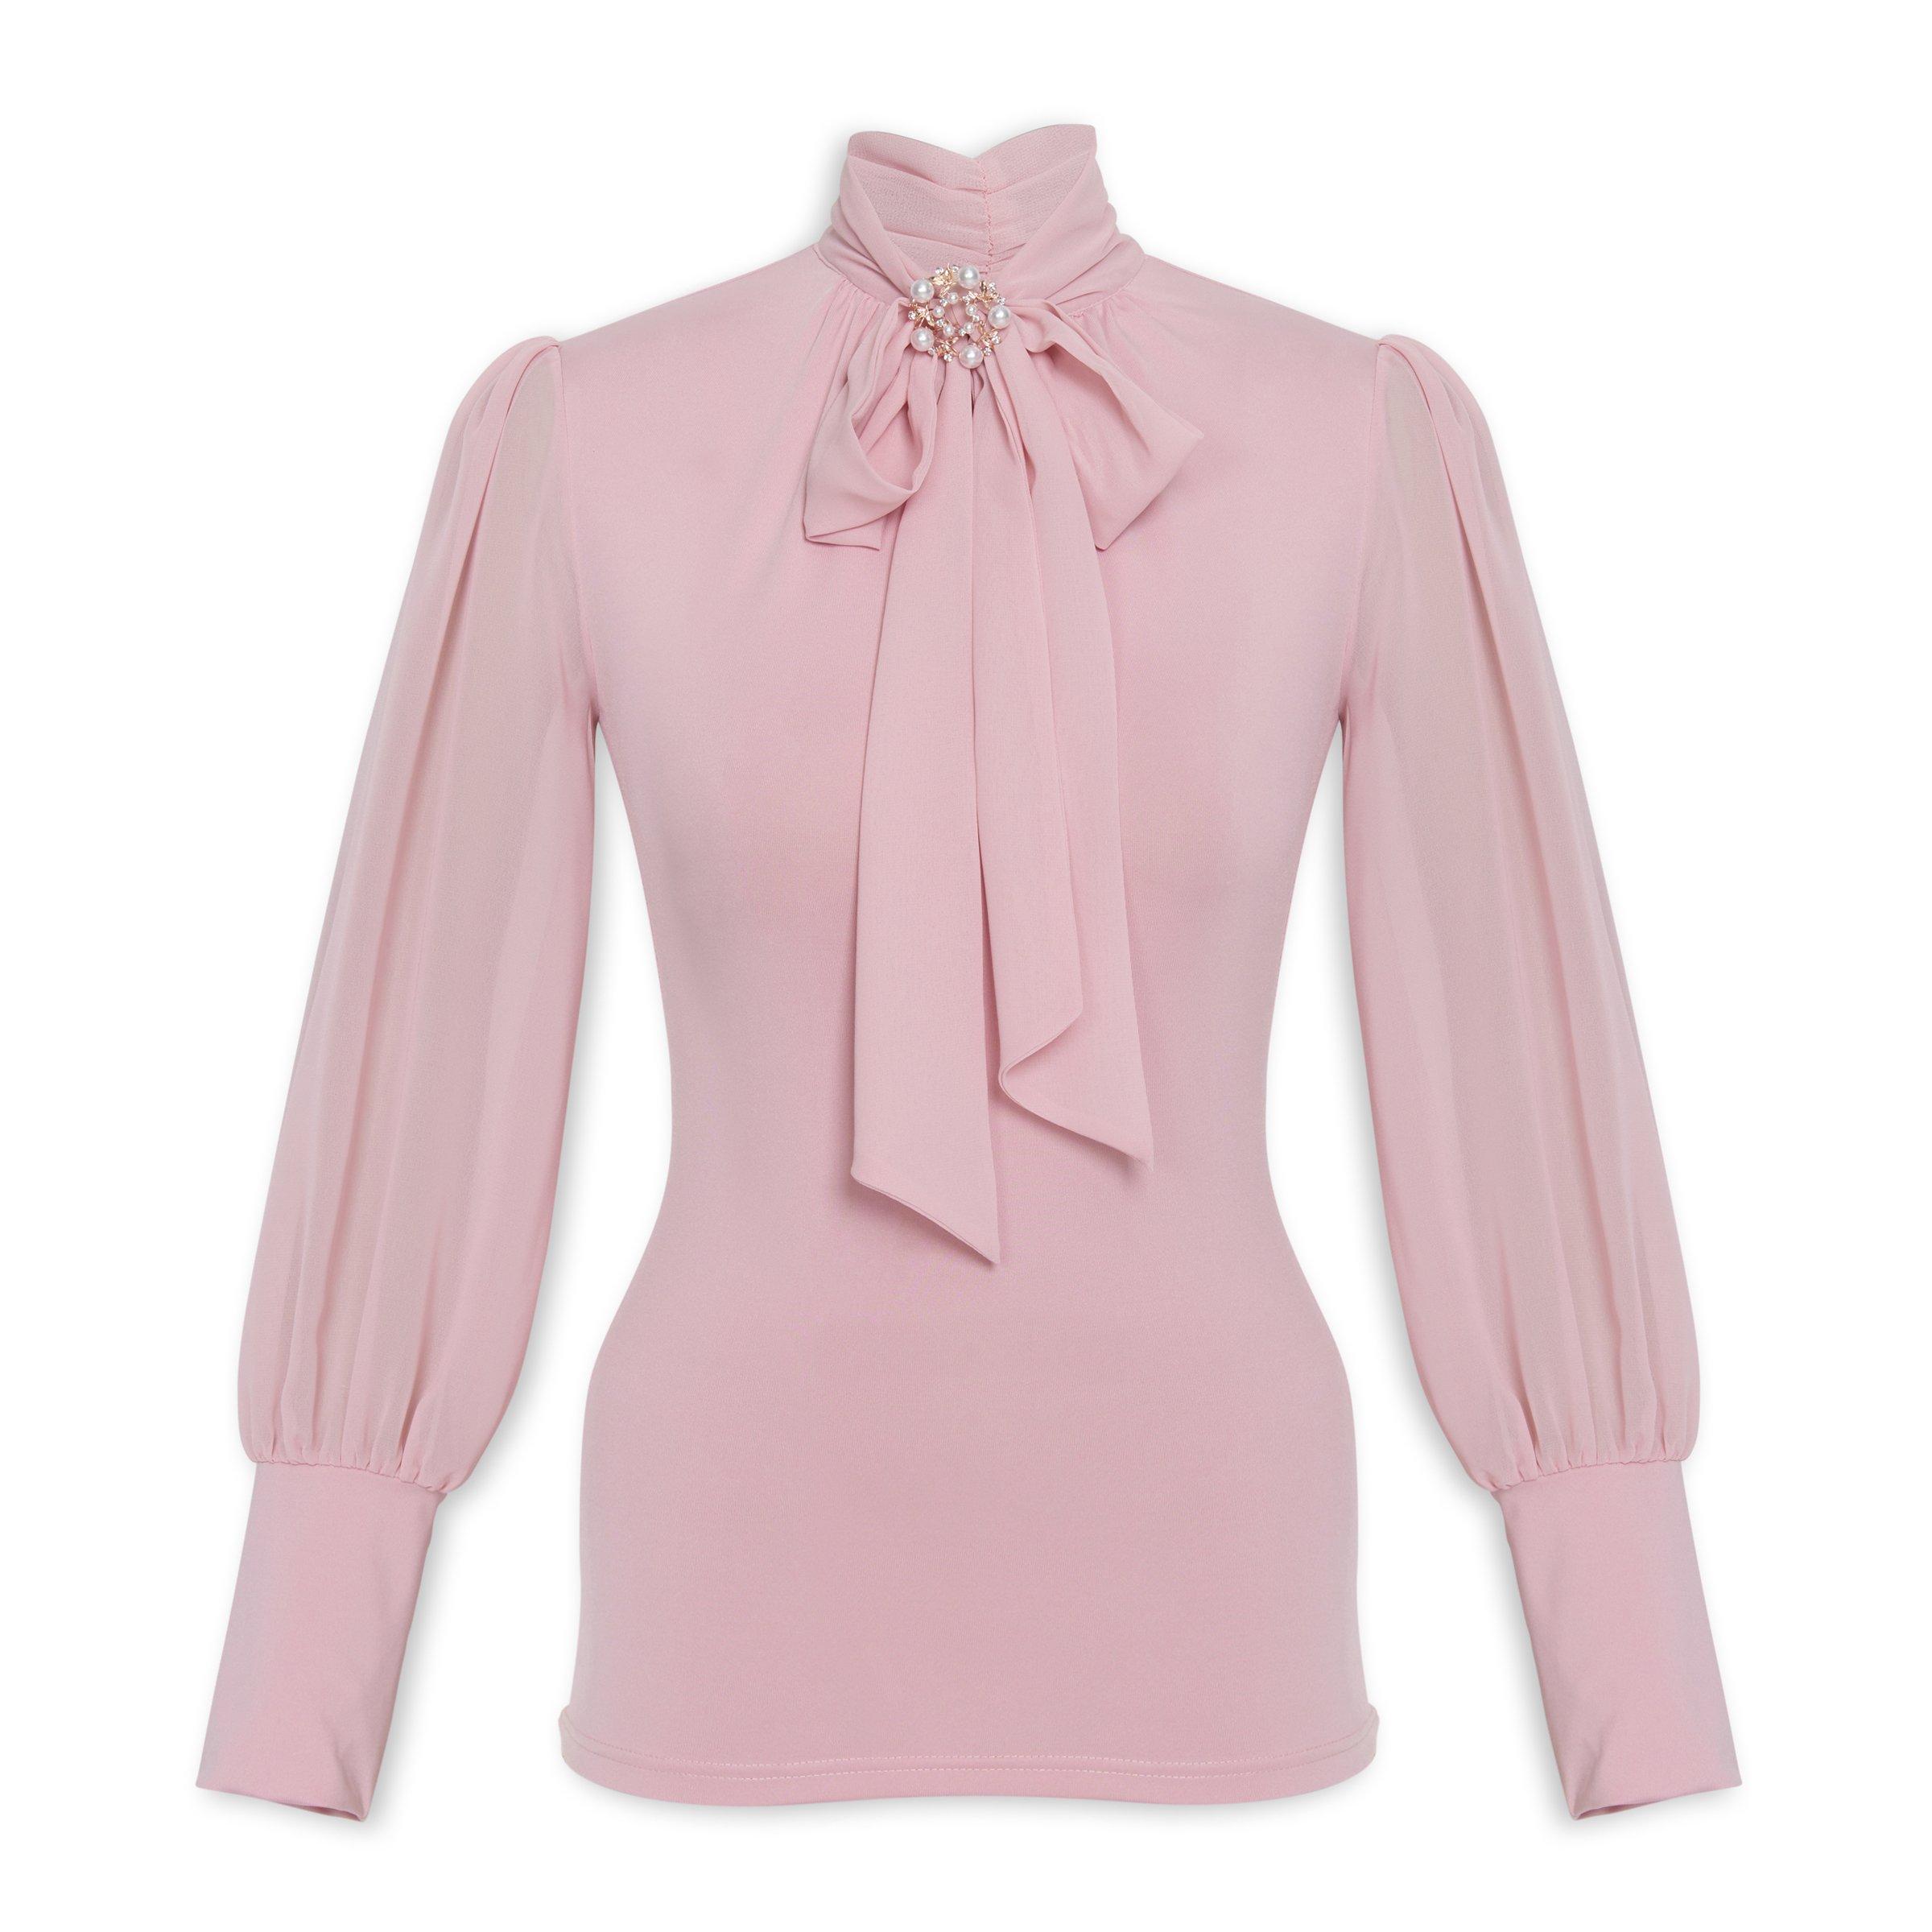 Buy Truworths Pink Kitty Tie Blouse Online | Truworths